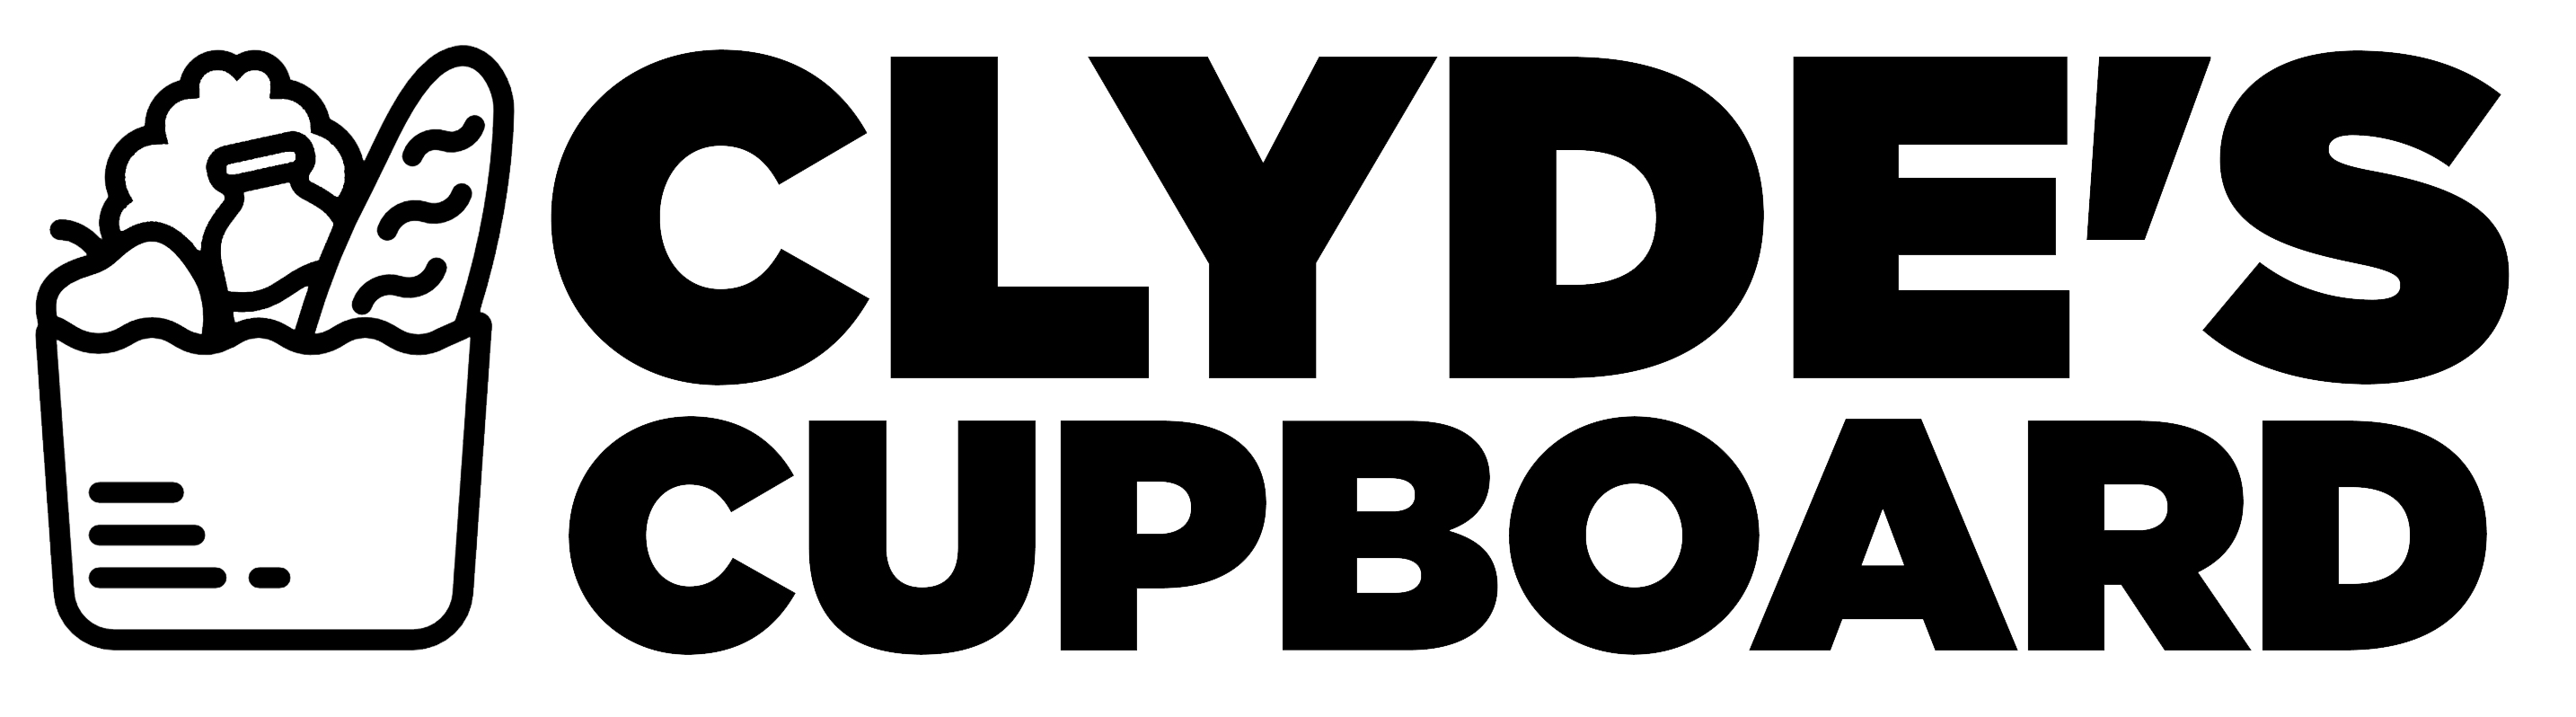 Clyde-s Cupboard Logo (black)